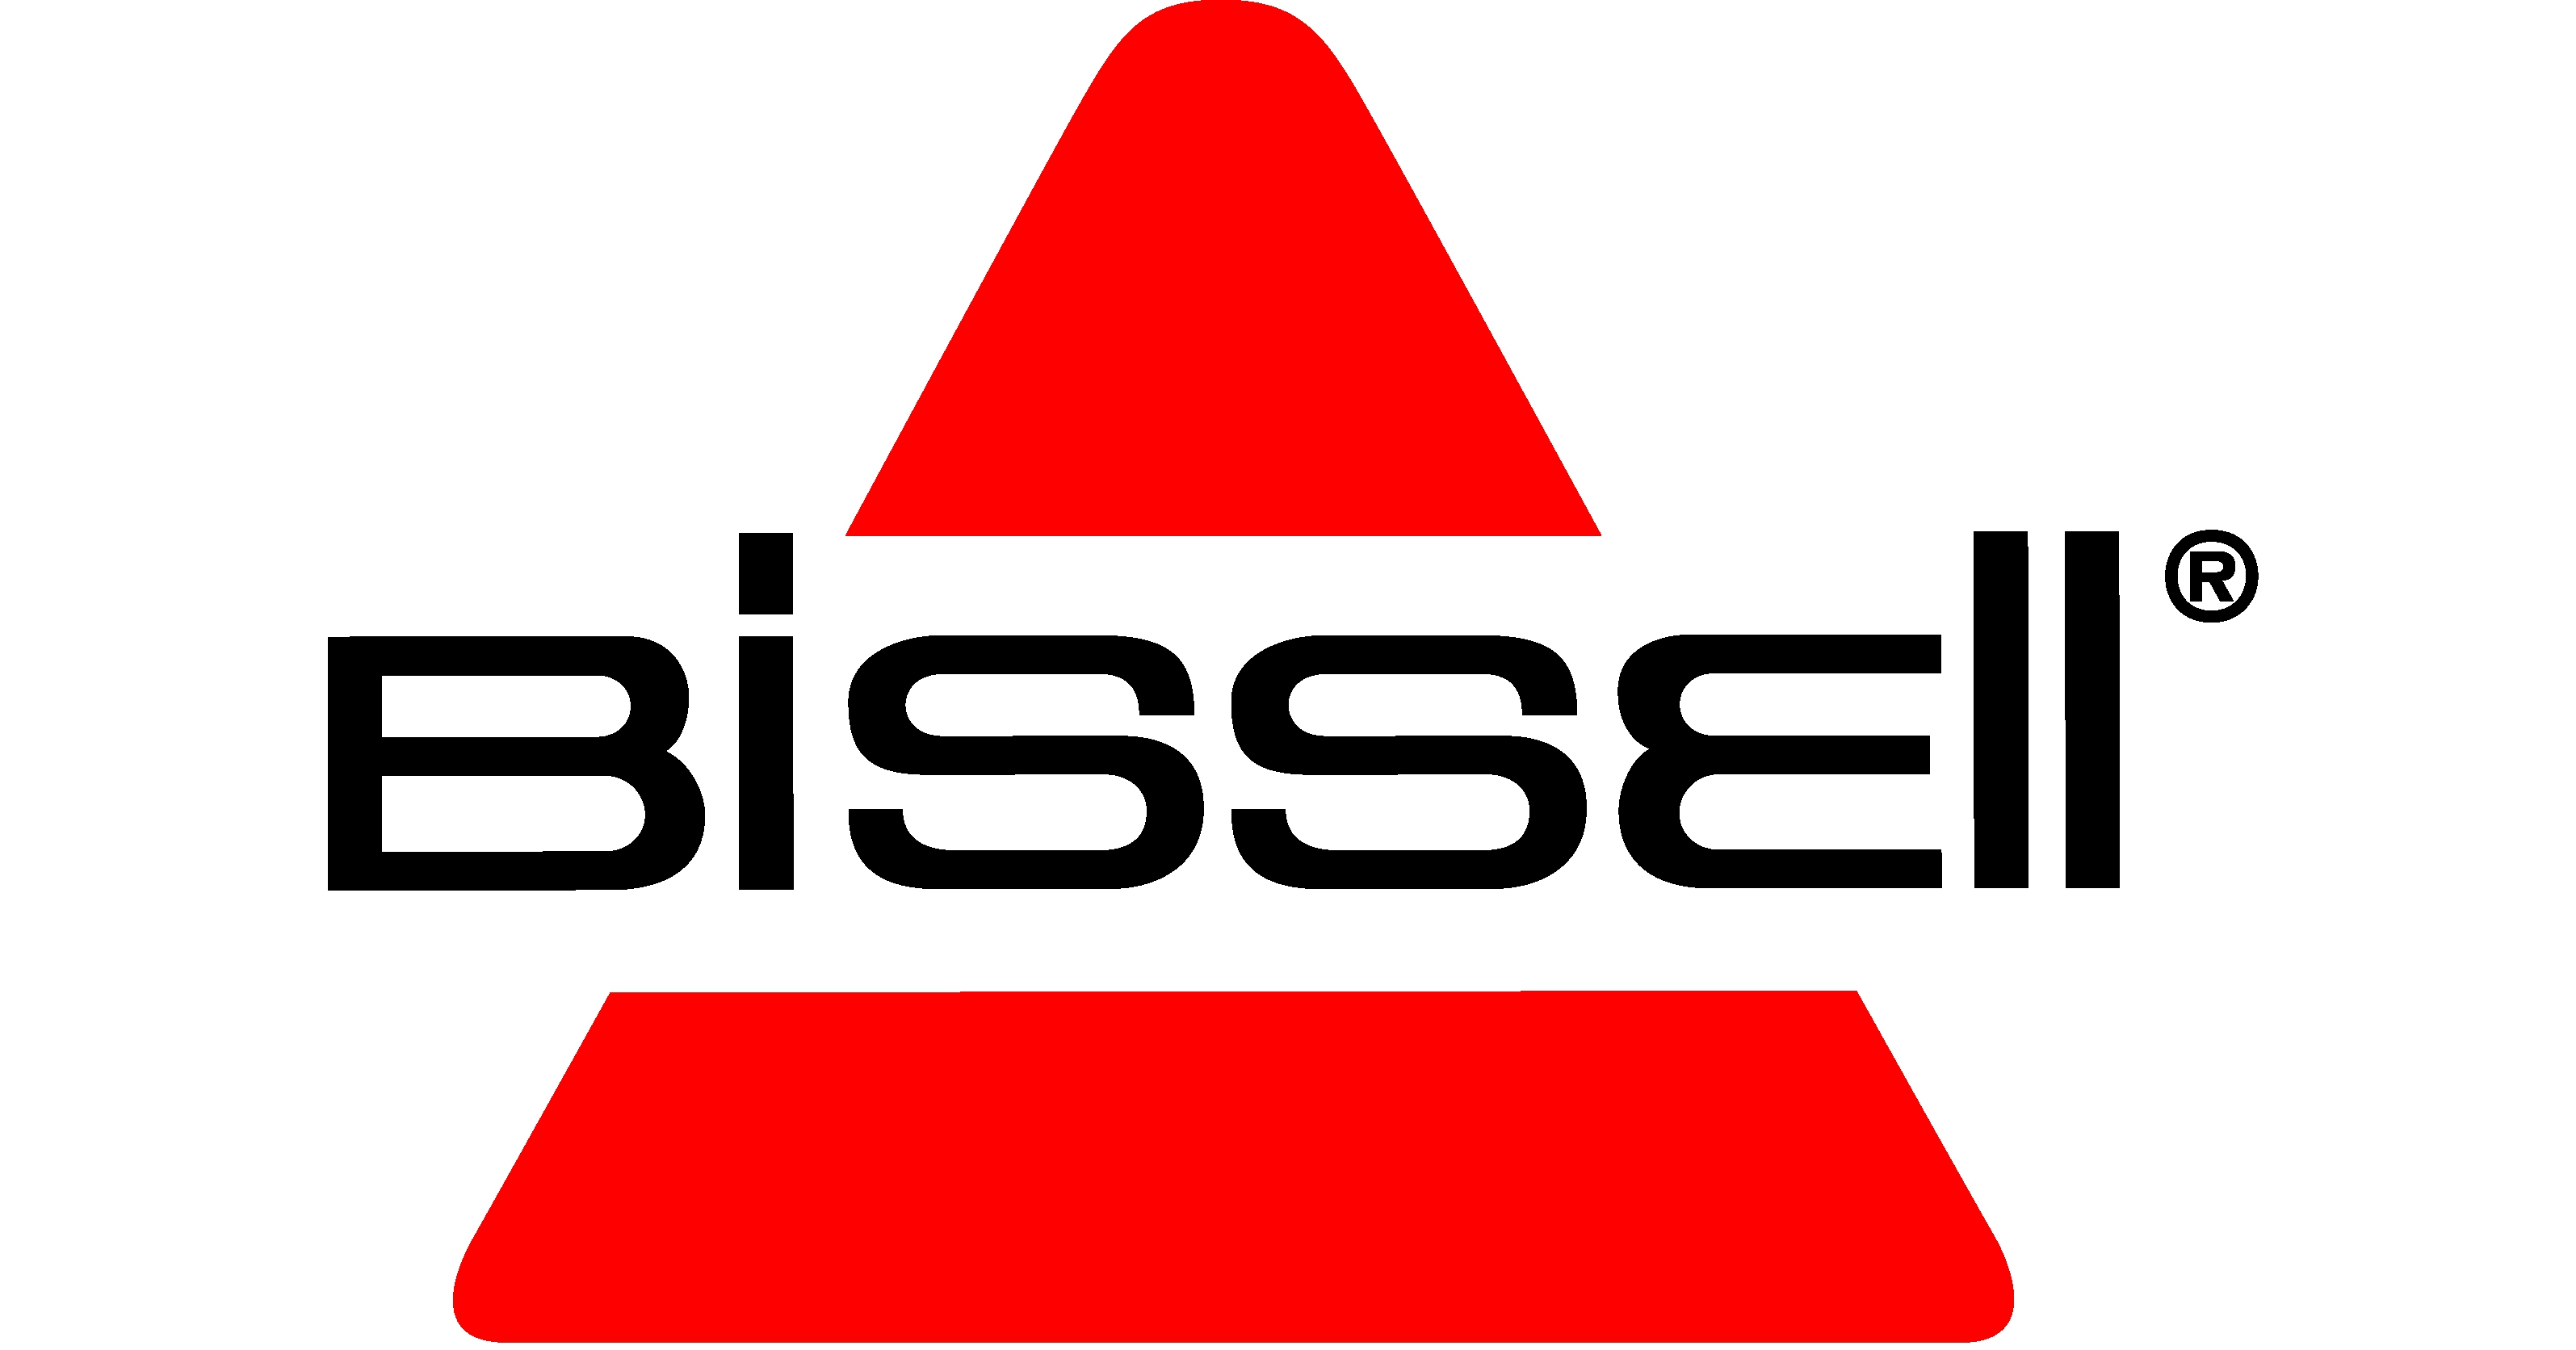 Bissell Logo